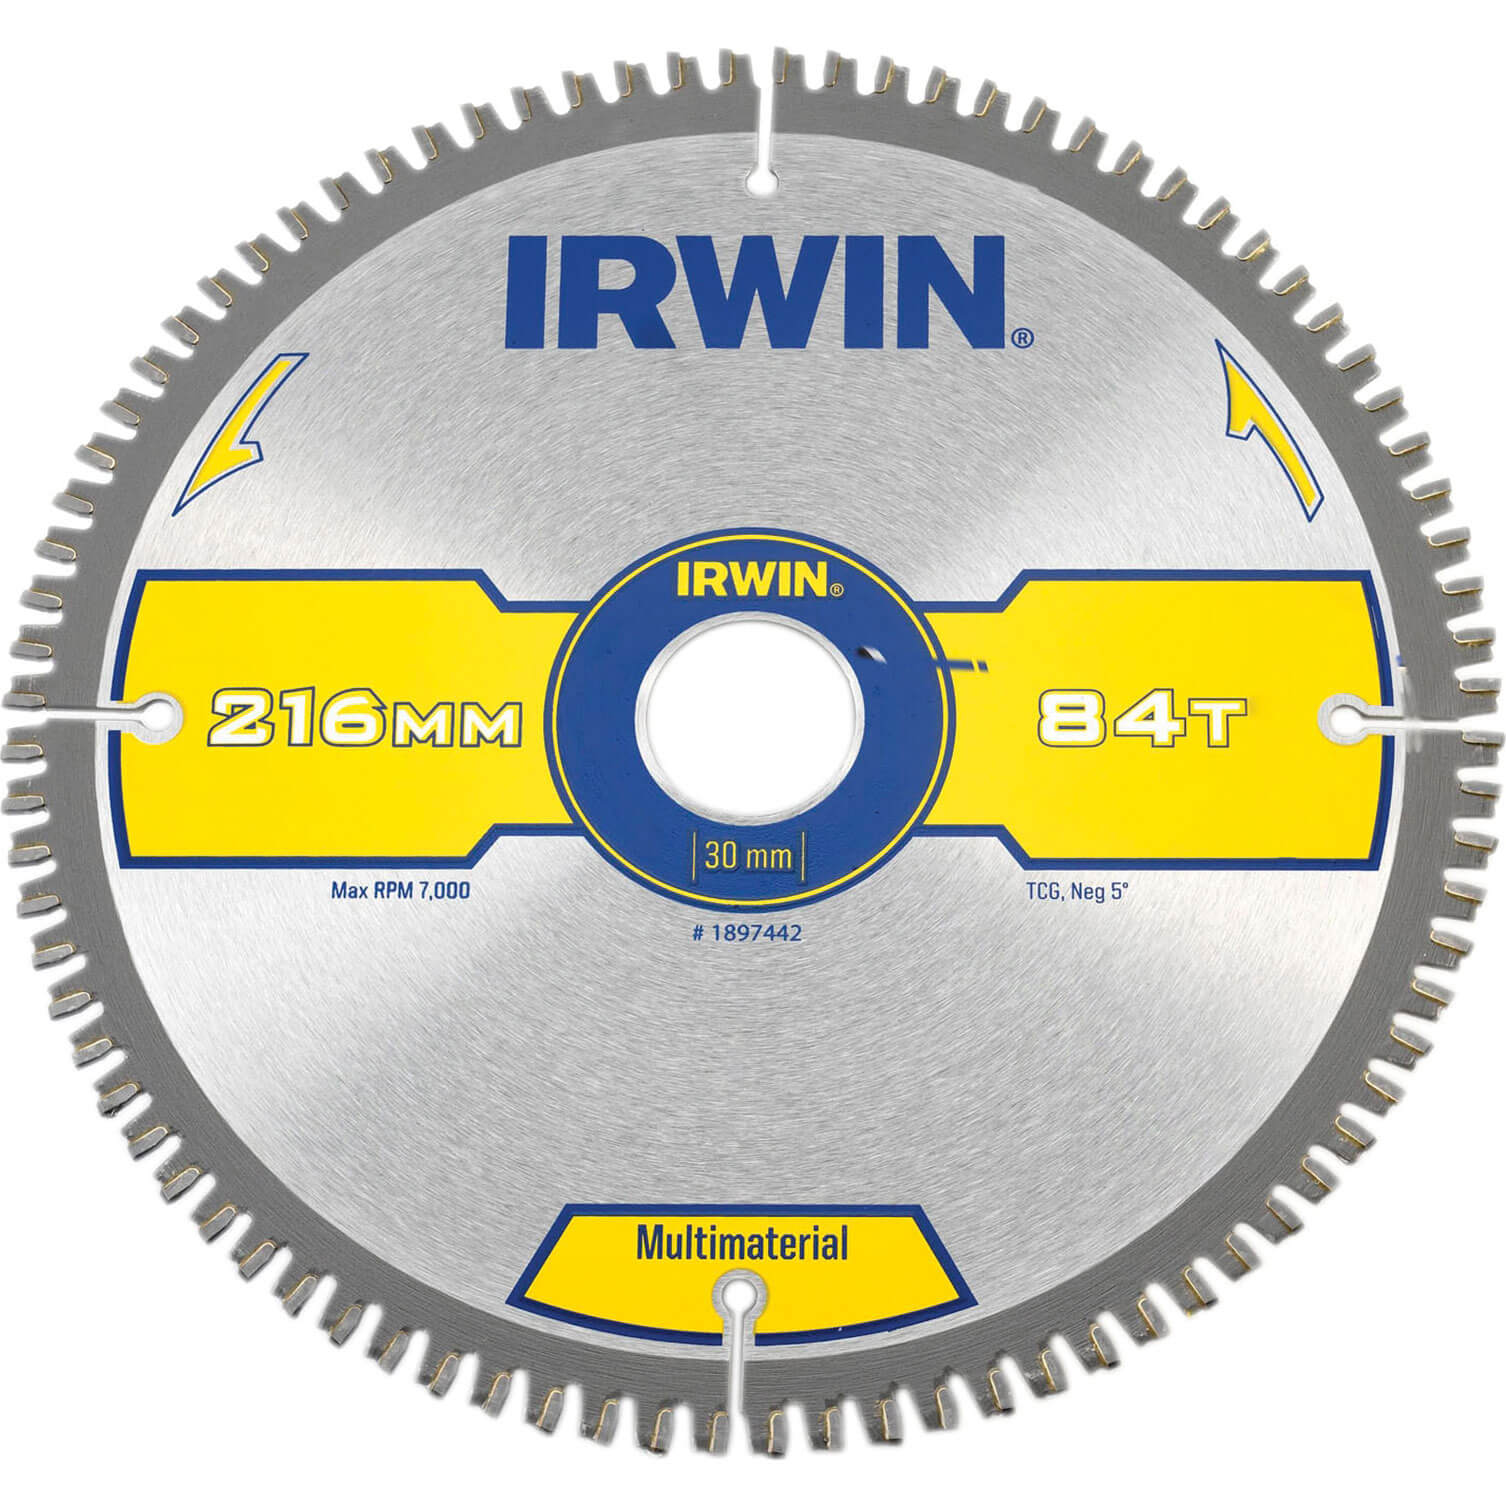 Image of Irwin Multi Material Circular Saw Blade 216mm 84T 30mm